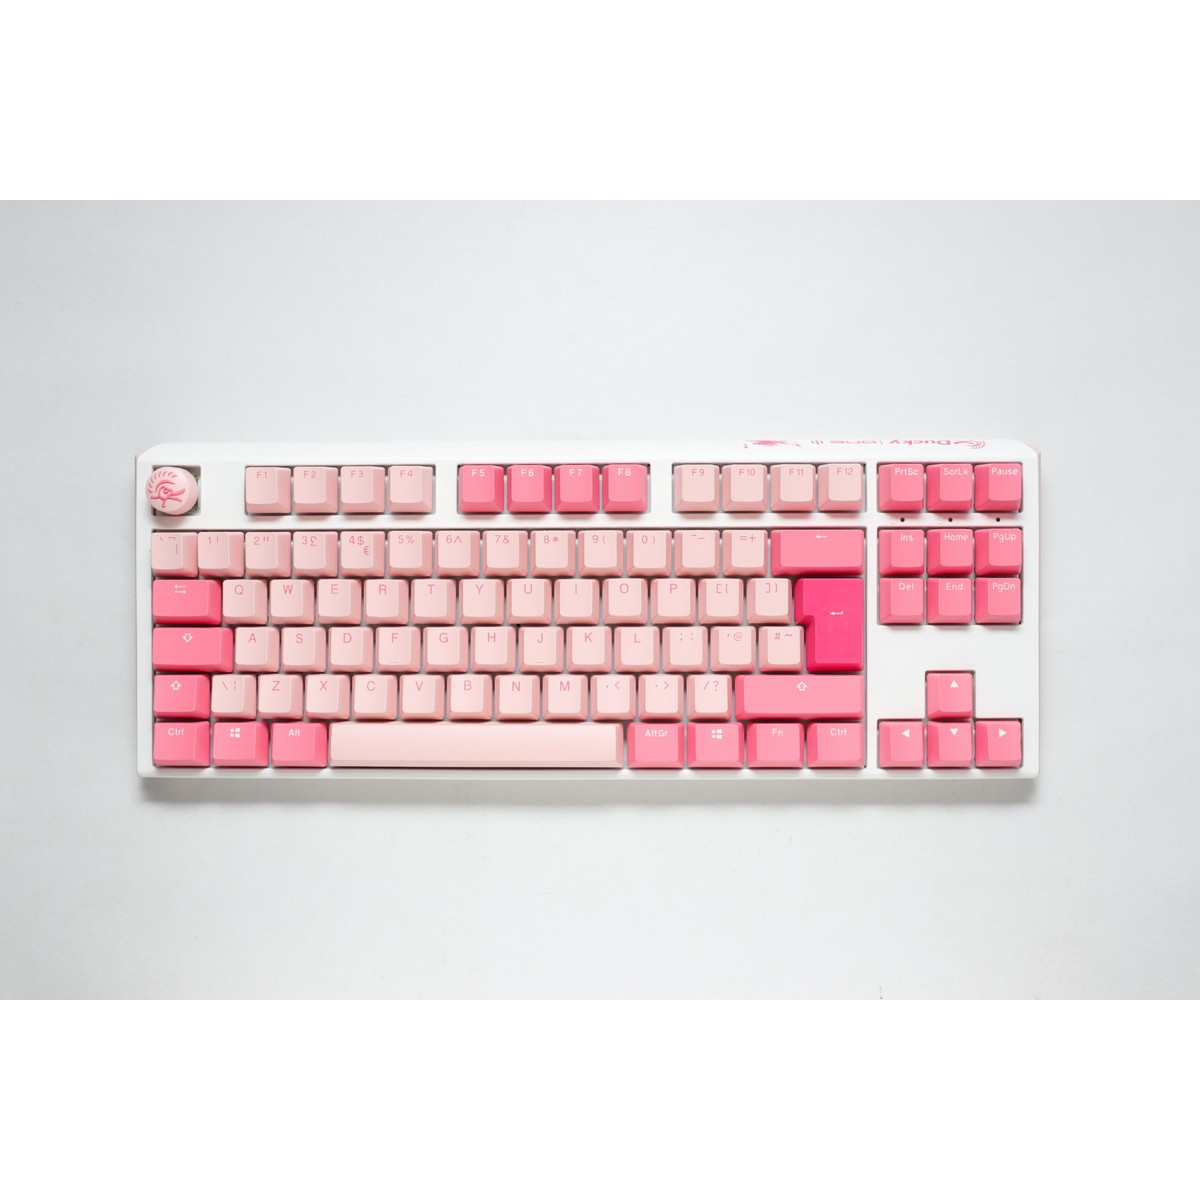 Ducky - Ducky One 3 Gossamer Pink TKL 80% USB Cherry MX Red Mechanical Gaming Keyboard U